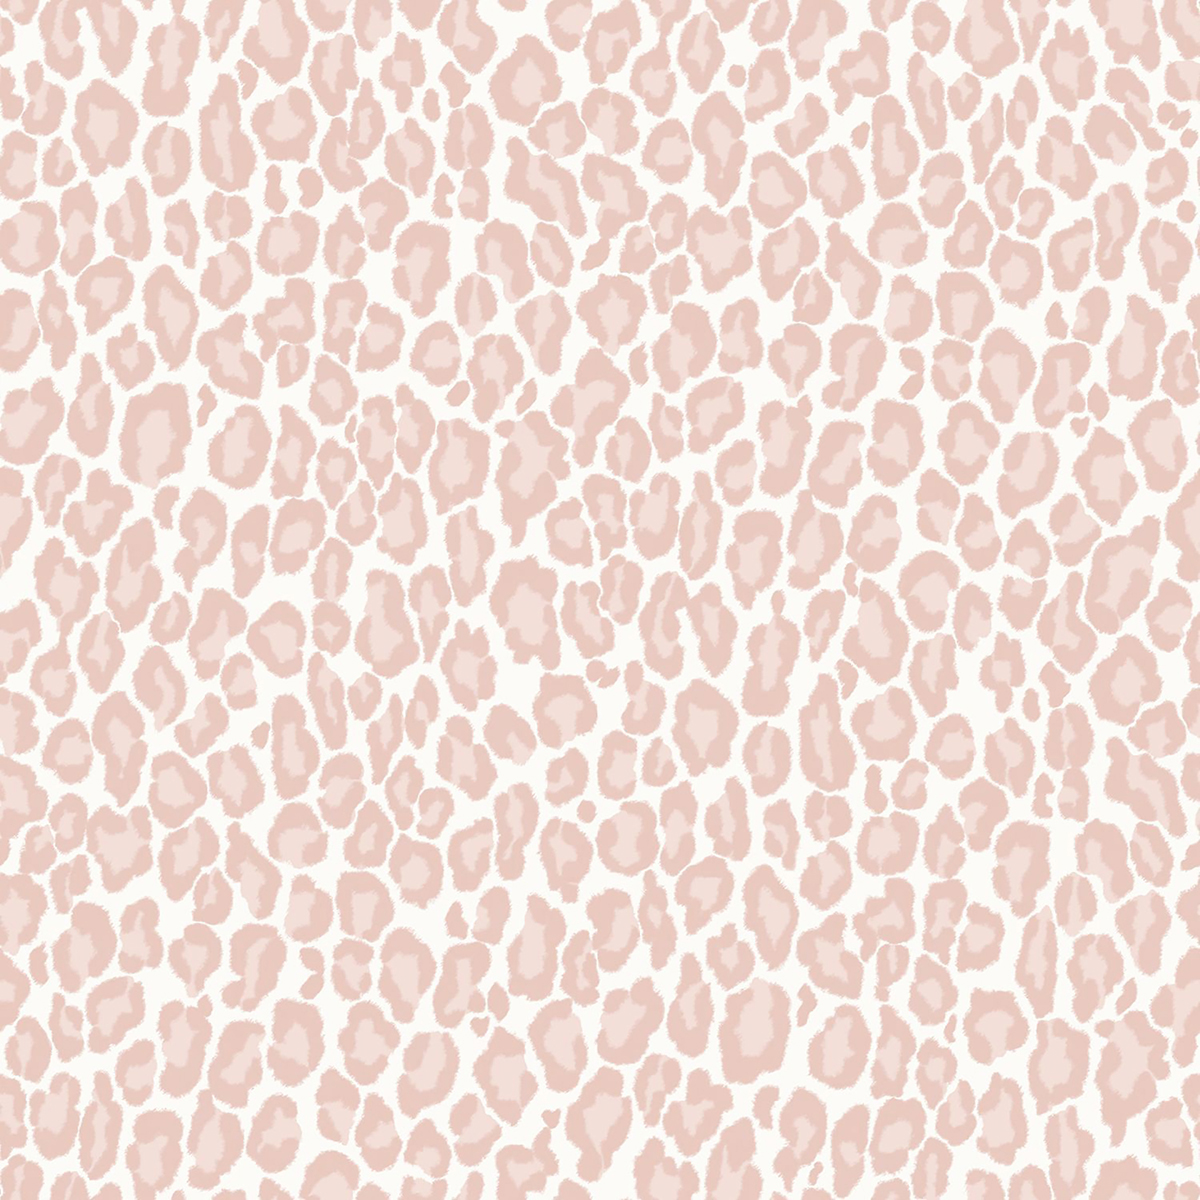 DD139150 - Cicely Pink Leopard Skin Wallpaper - by ESTA Home